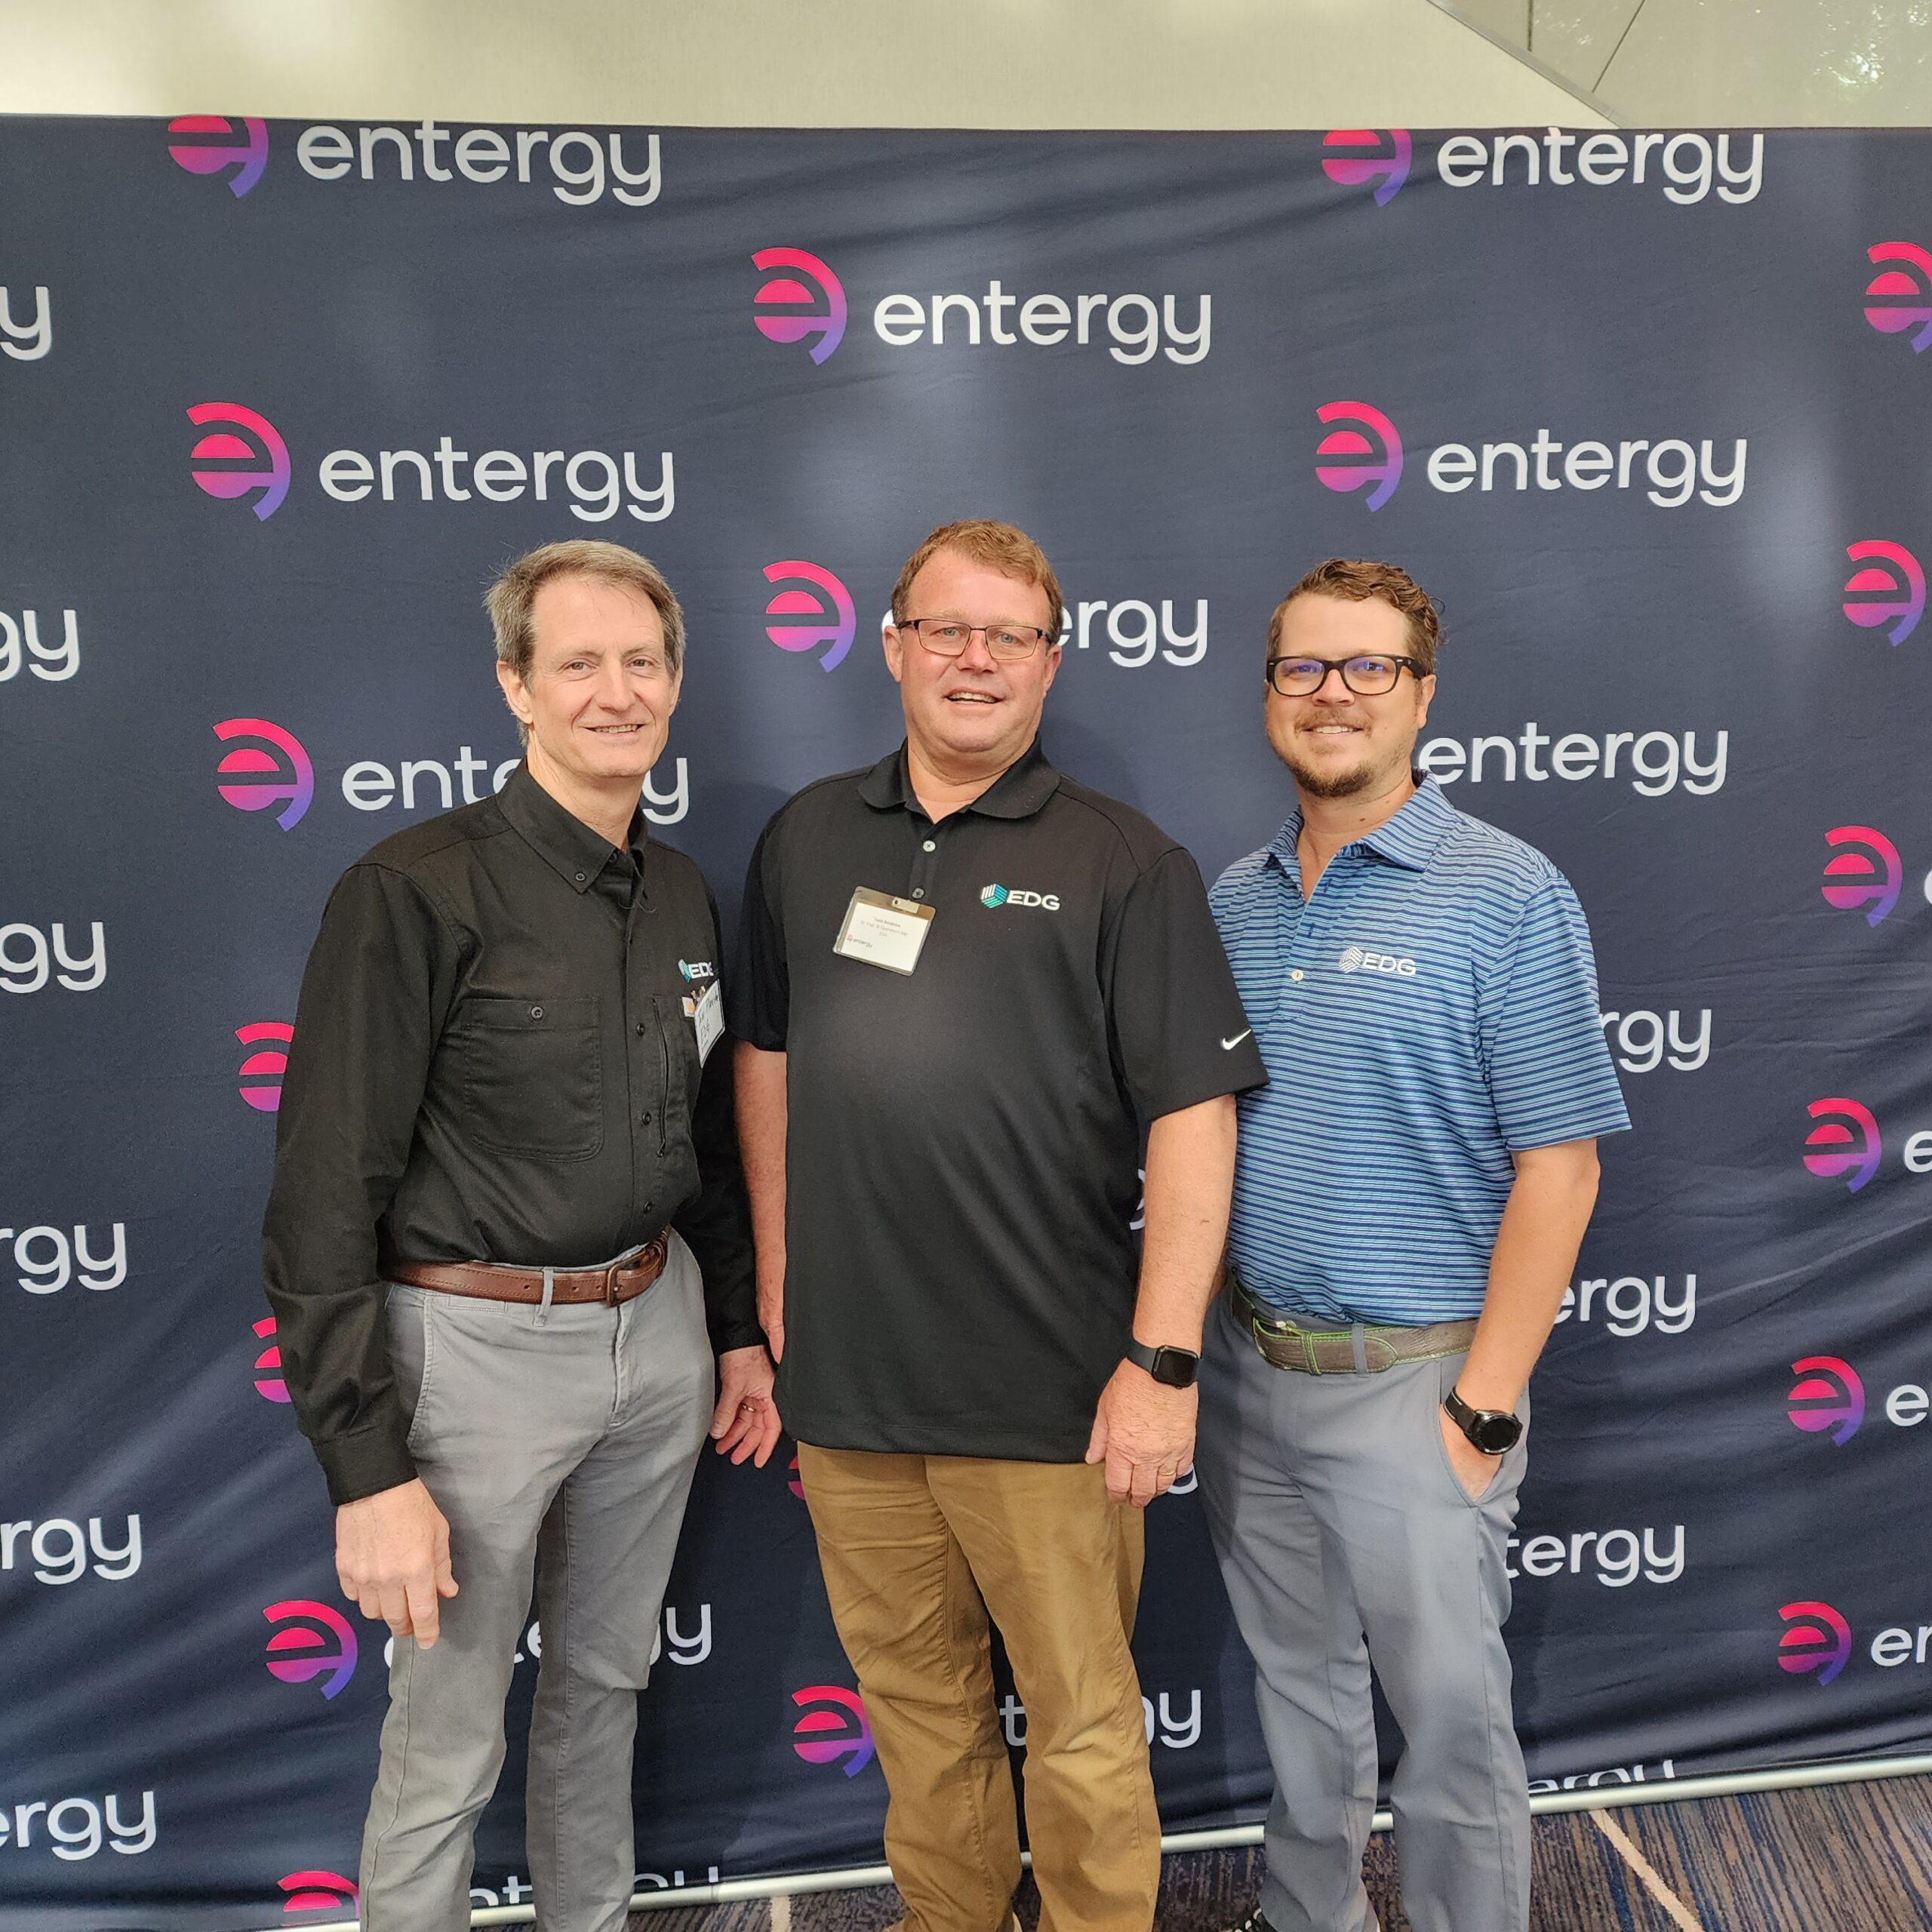 Entergy Safety Summit 2023 - EDG Utility Services Group